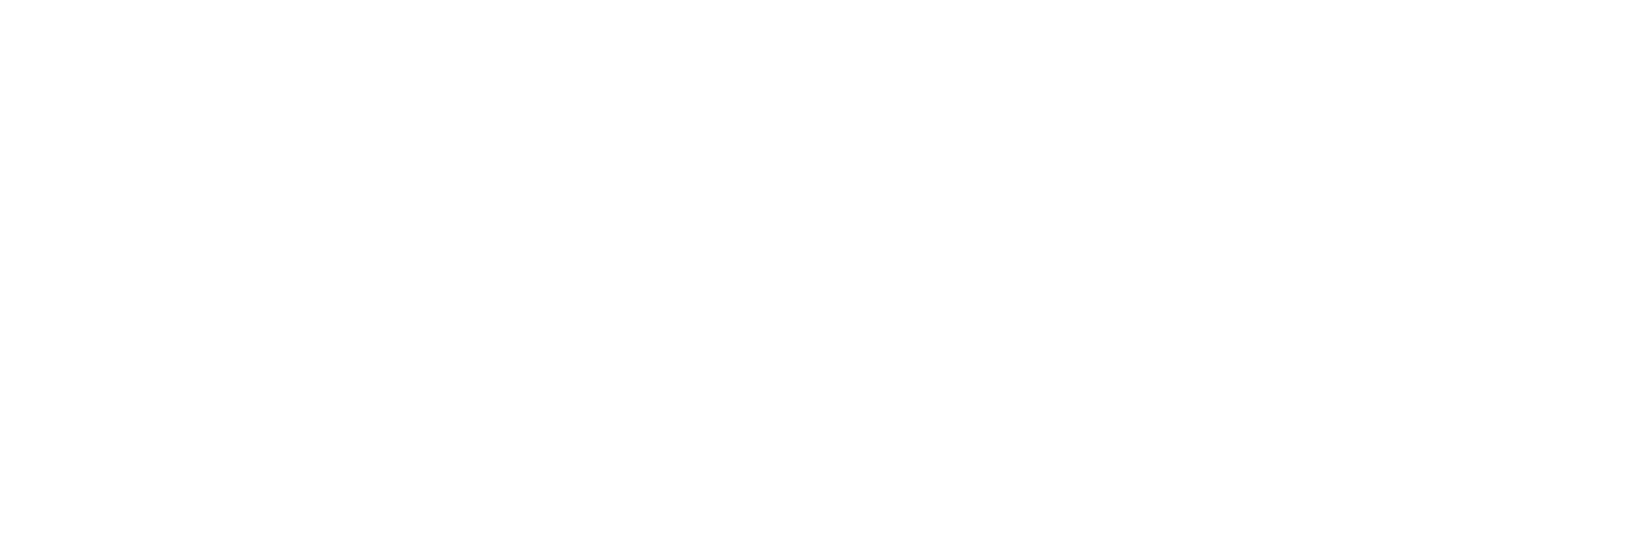 PSR SOW Accredited Supplier Logo_WHITE-min